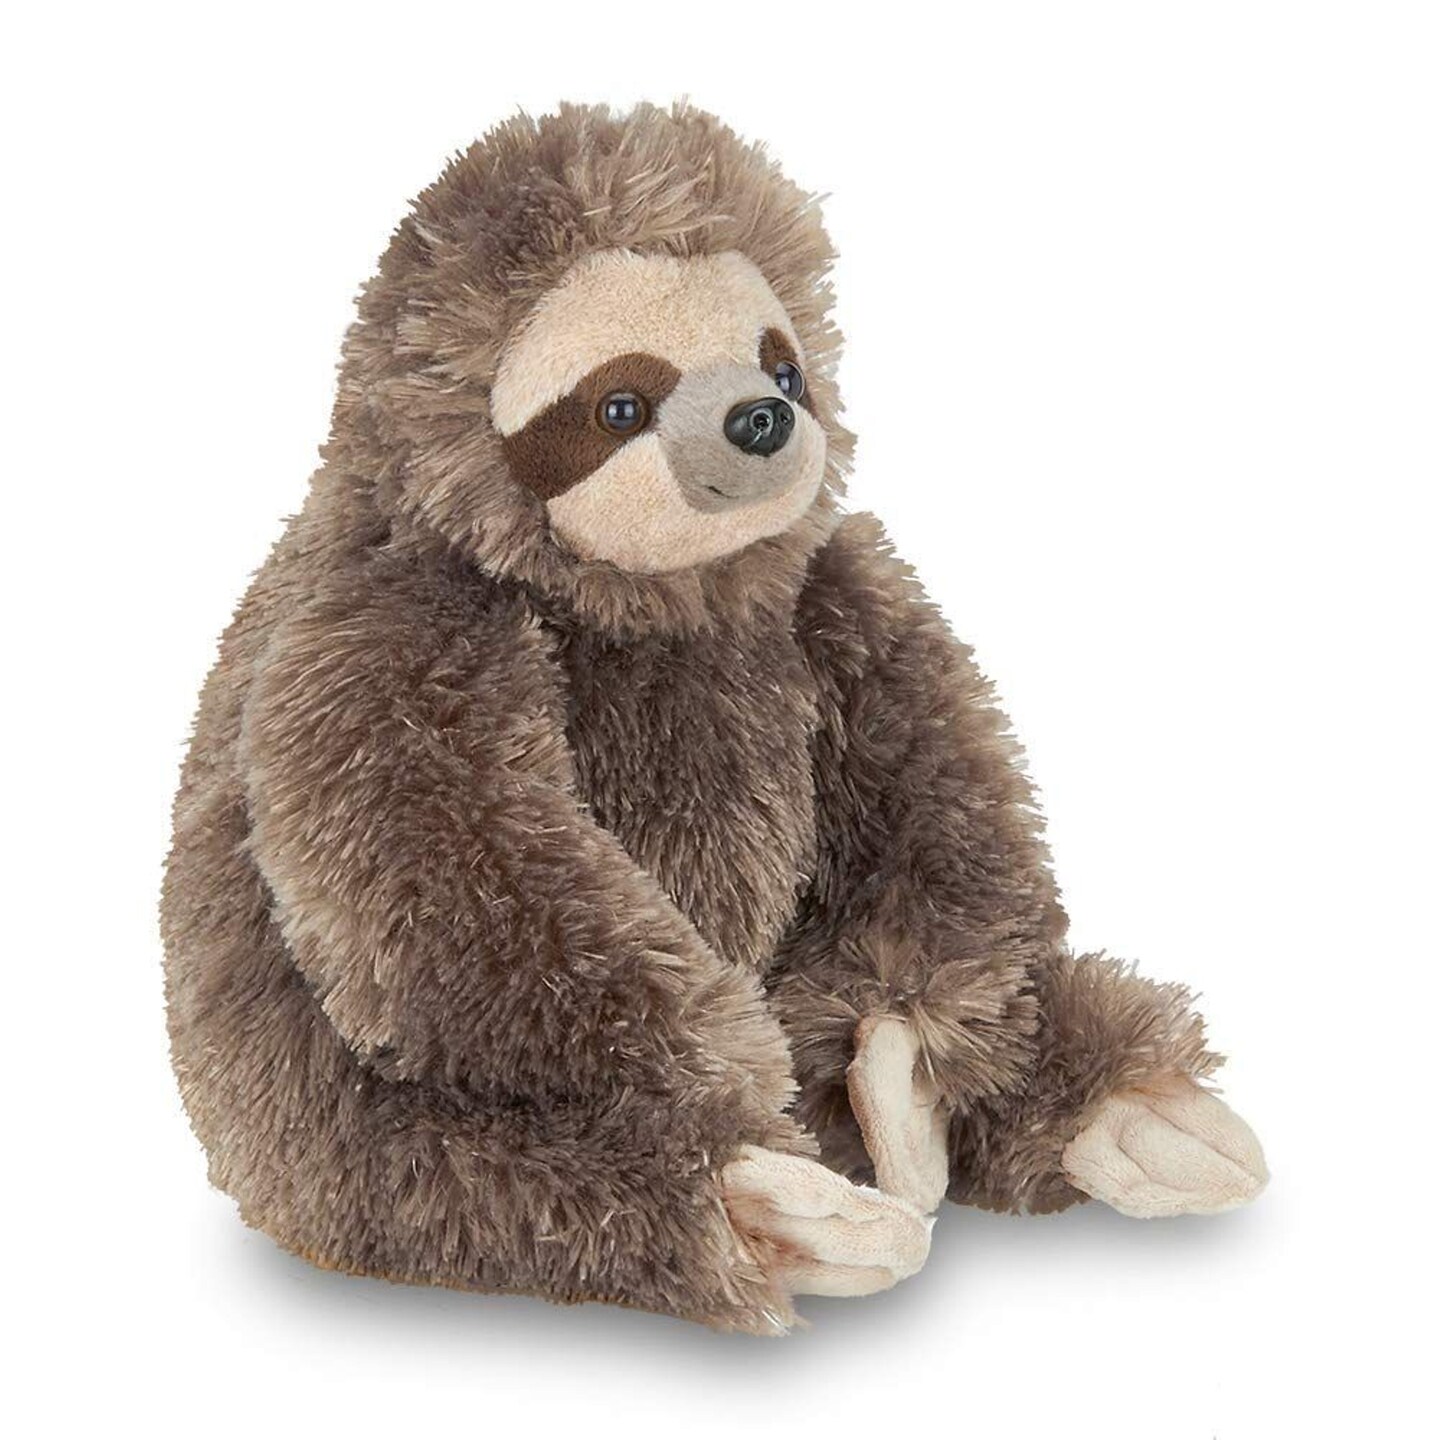 Bearington Speedy Plush Three Toed Sloth Stuffed Animal, 12 inches